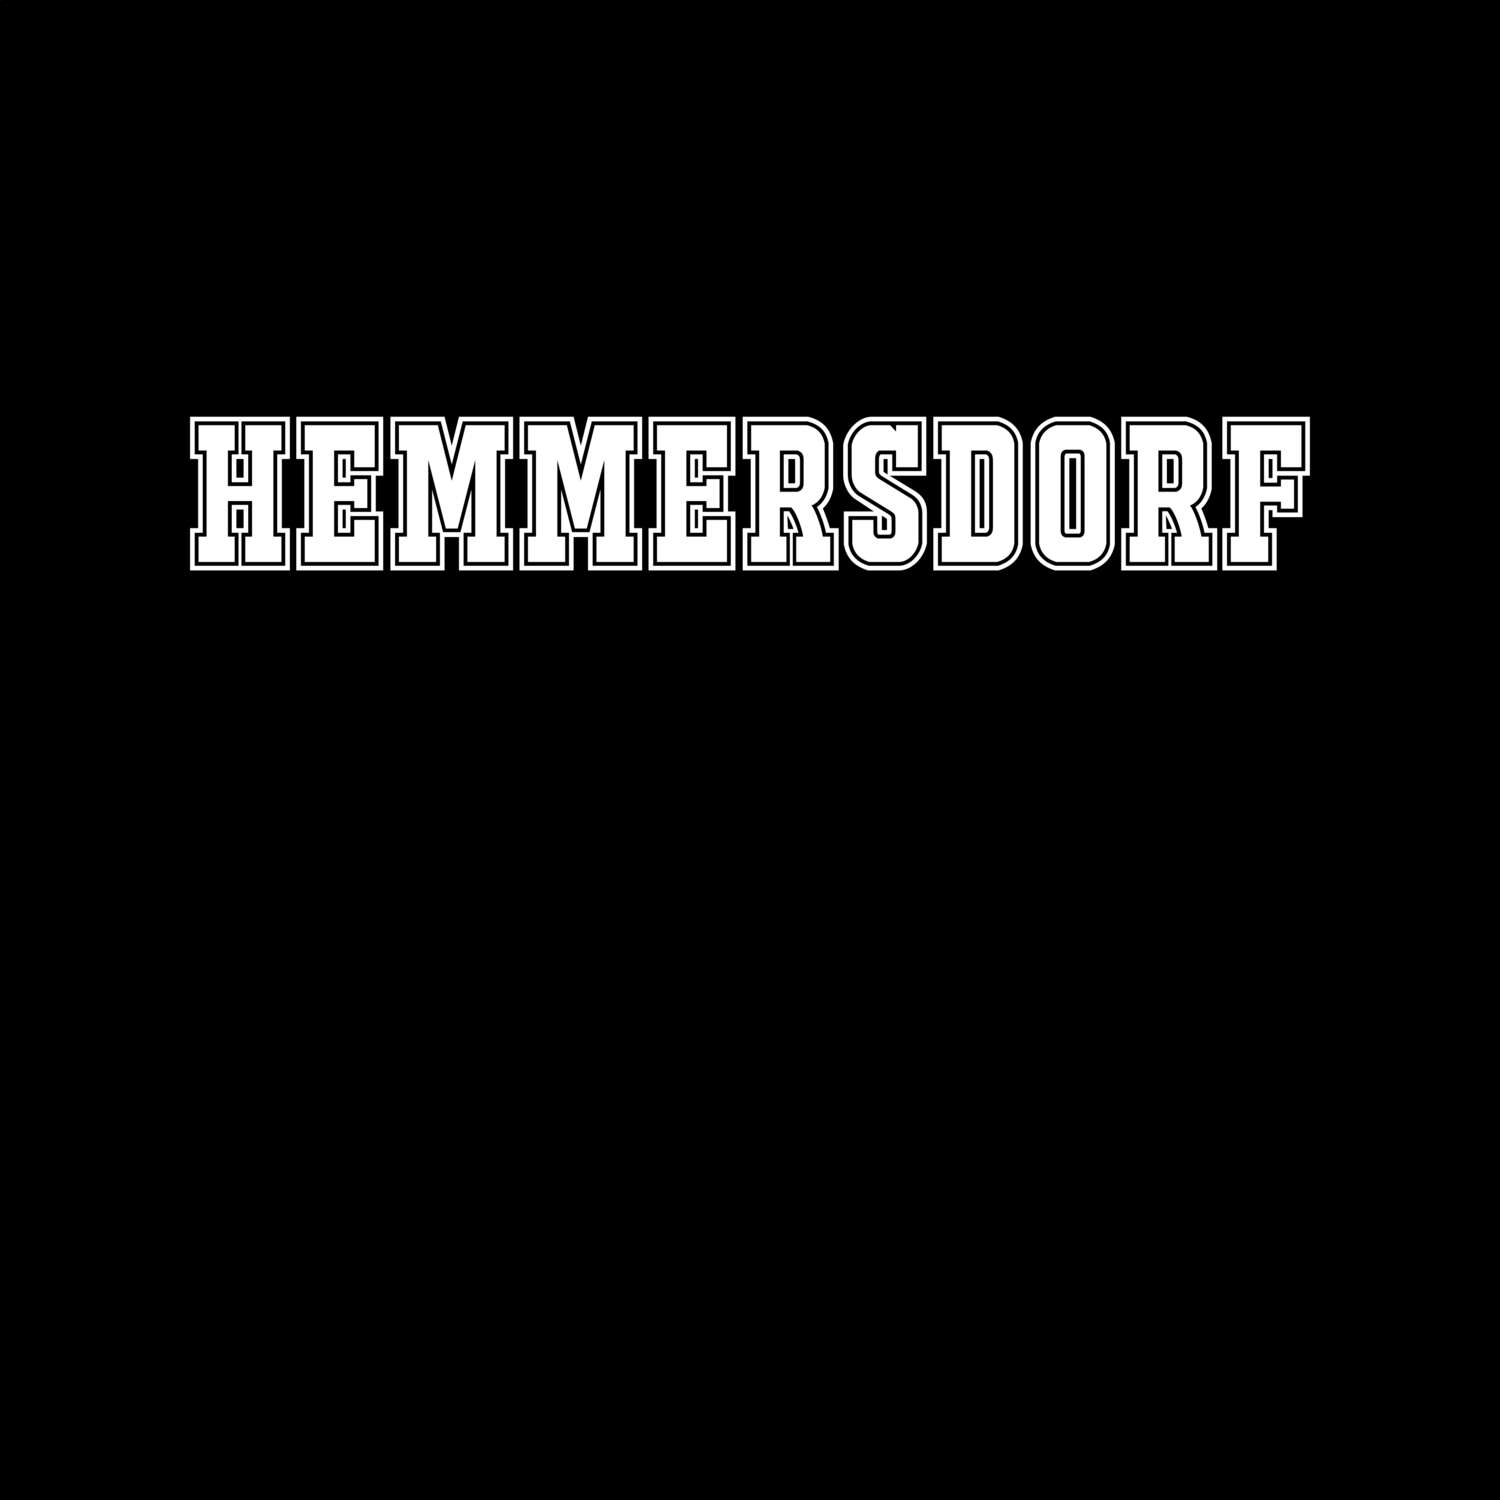 Hemmersdorf T-Shirt »Classic«